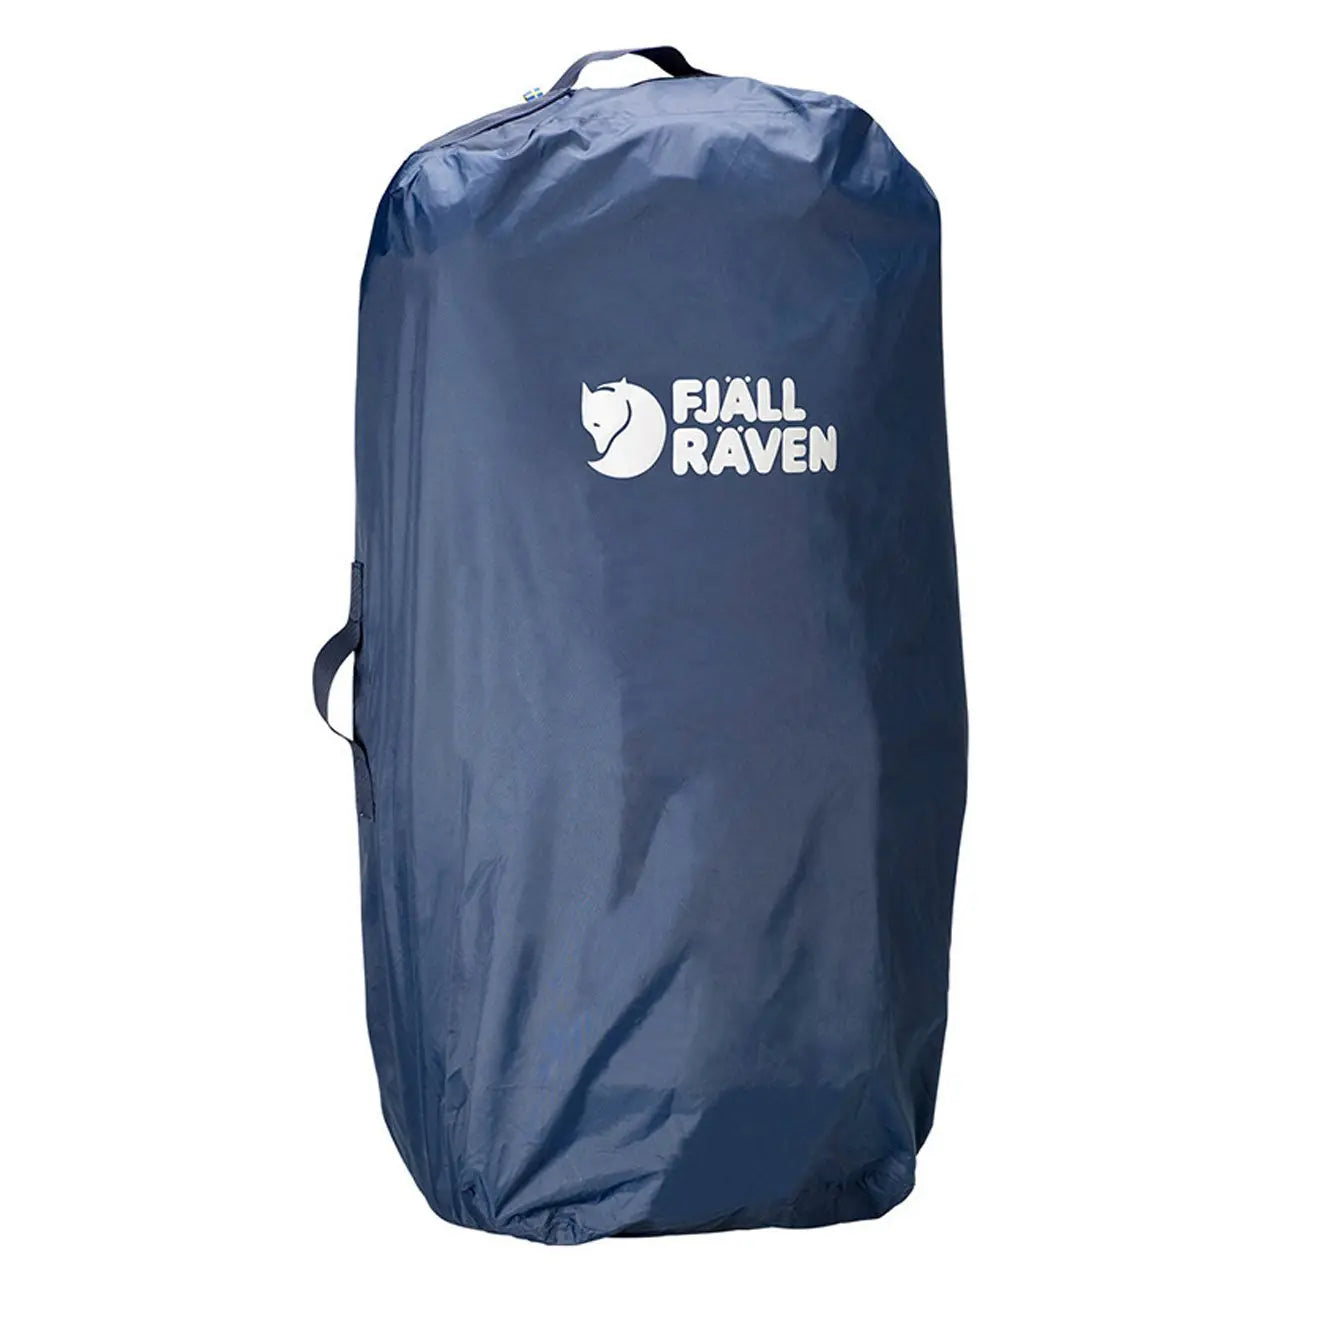 Flight bag. Чехол для полета. Fjallraven Waterproof Packbag 50 л. Bag for Flight.